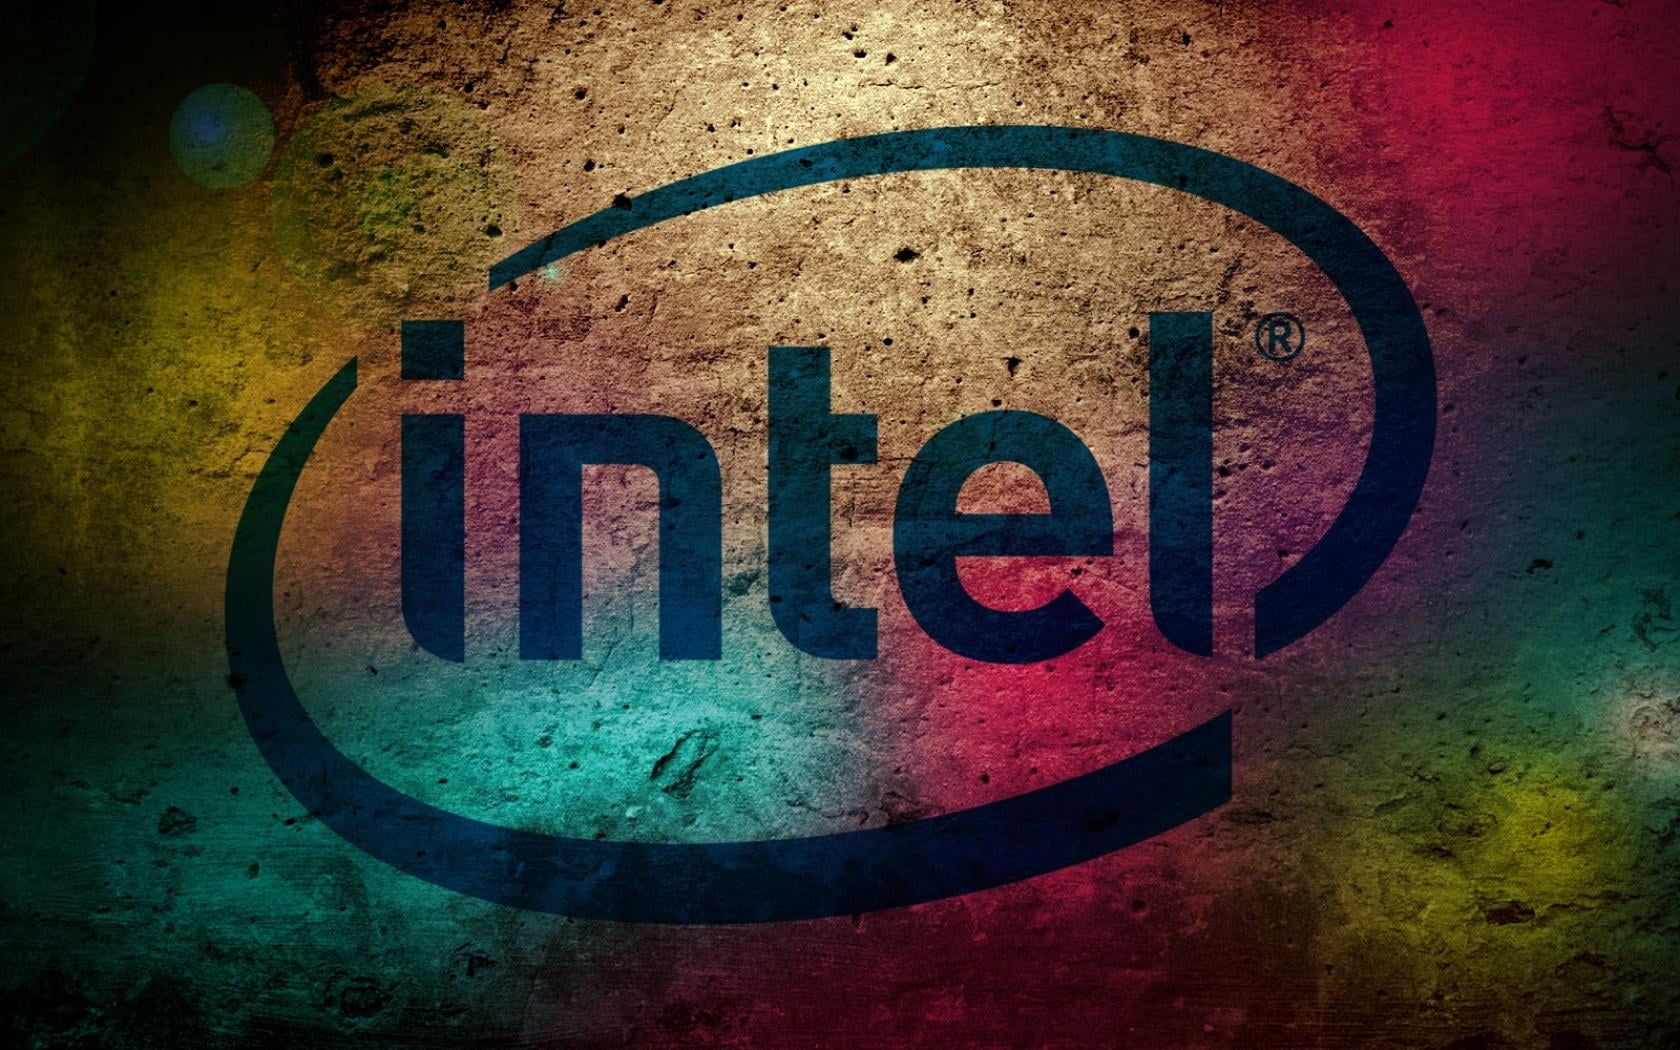 Intel Background, Intel logo #Computers #Intel #computer #colorful P # wallpaper #hdwallpaper #desktop. Intel, Apple logo wallpaper, Wallpaper